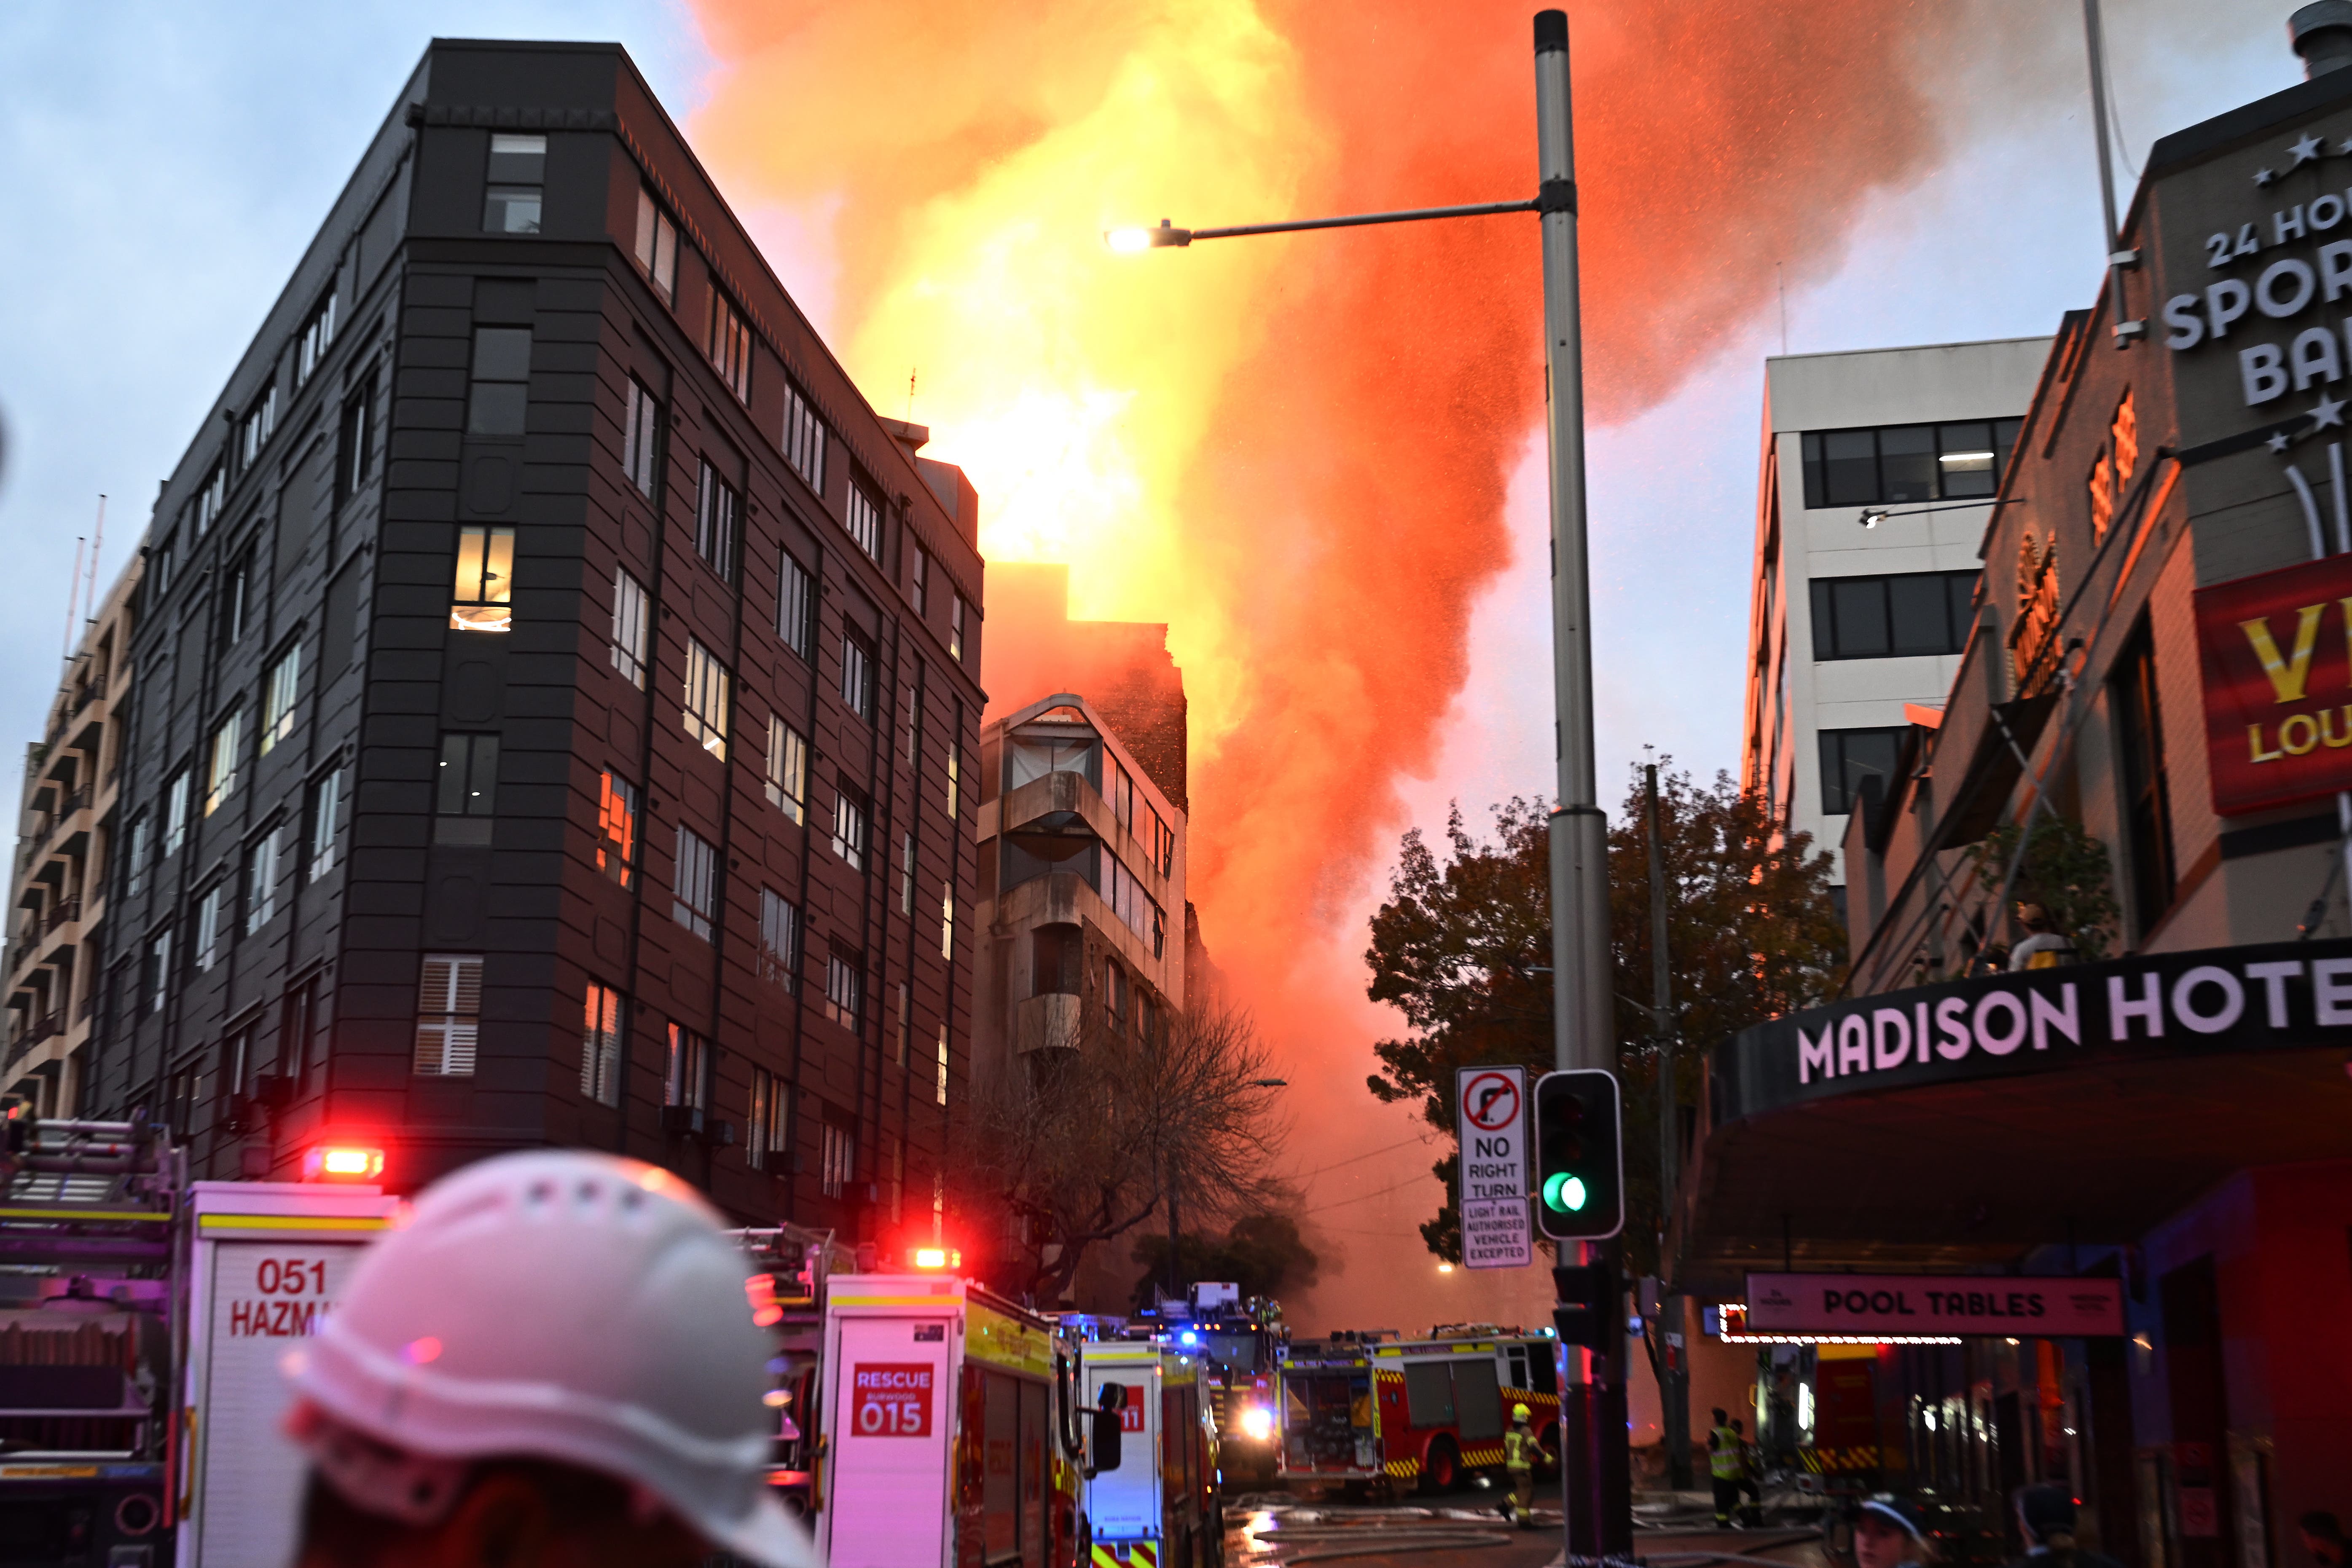 Sydney fire: Blaze engulfs seven-storey tower in Surry Hills as highest-level ‘10th alarm’ emergency declared